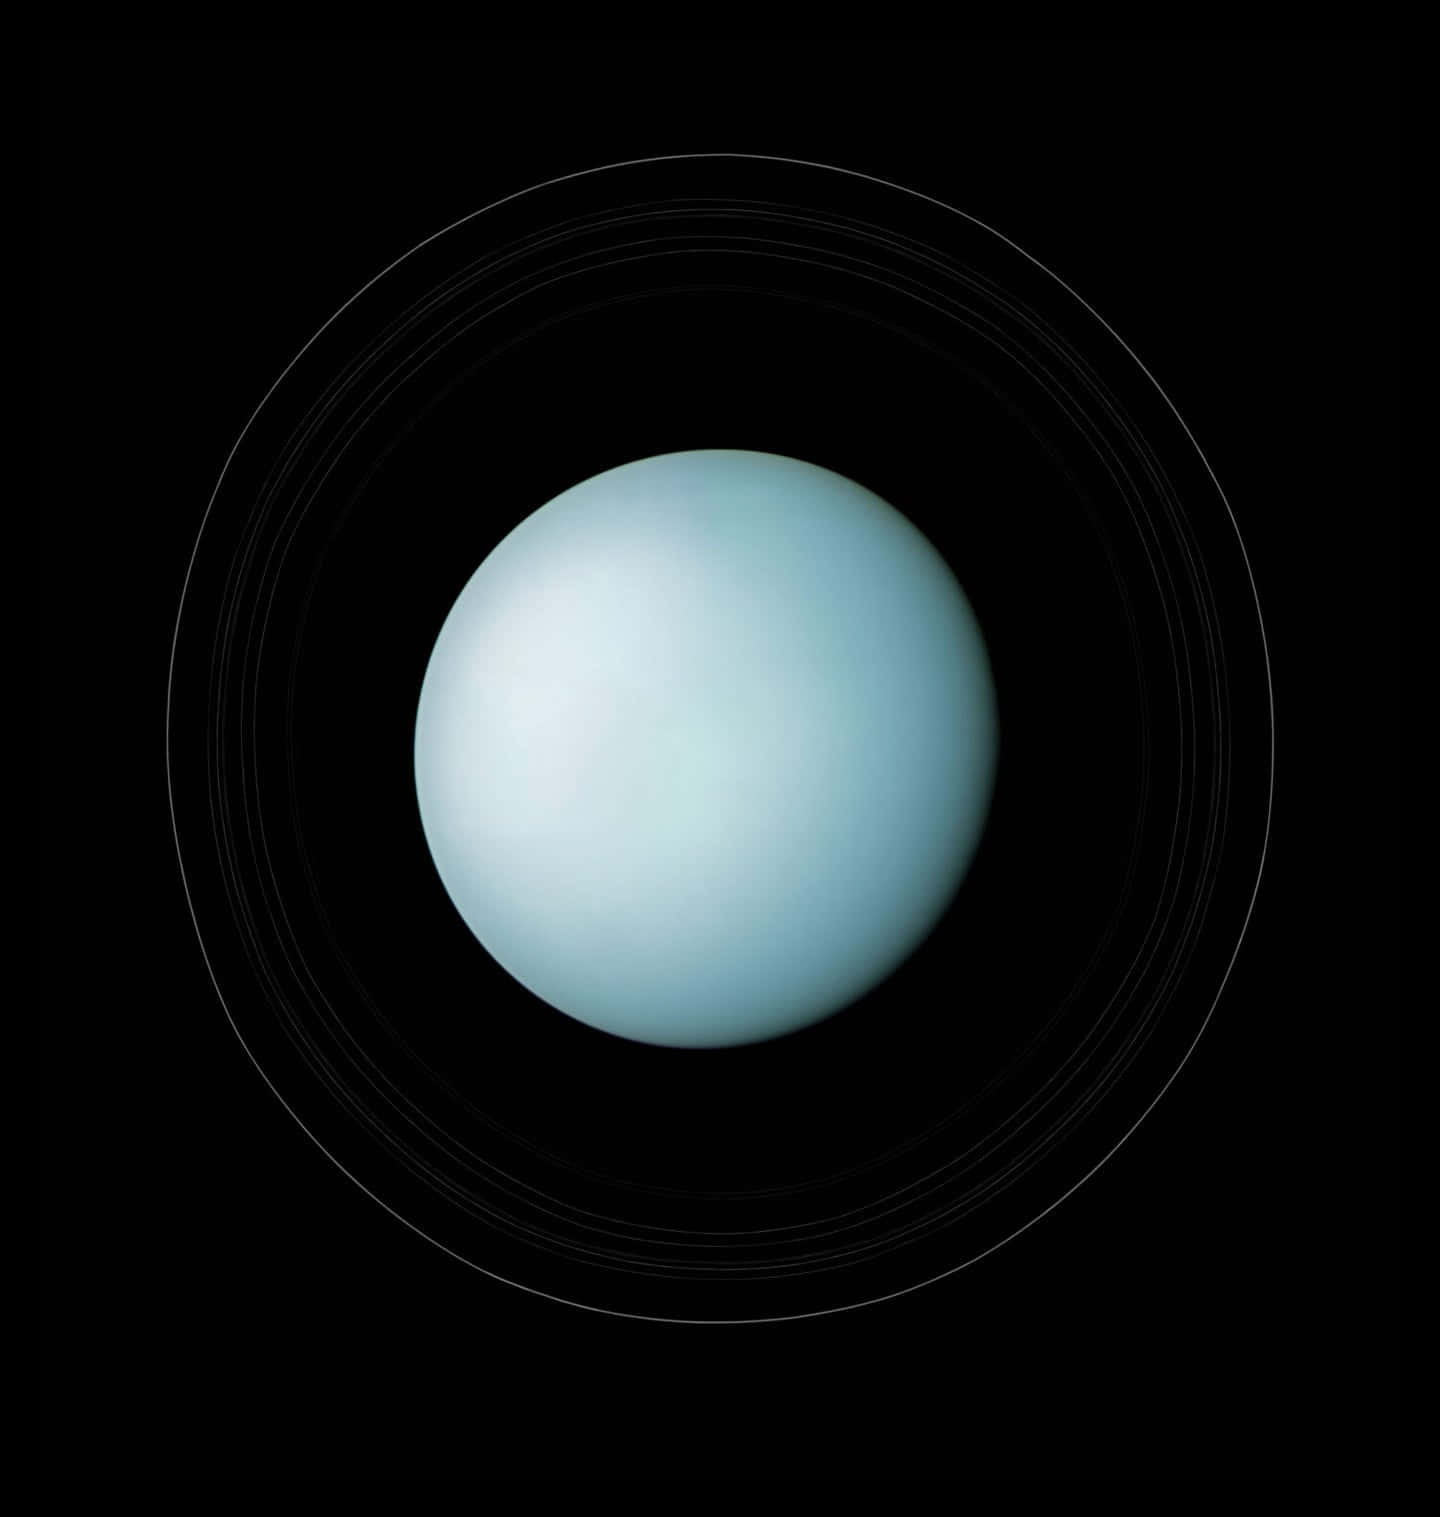 Stunning Uranus in High Resolution